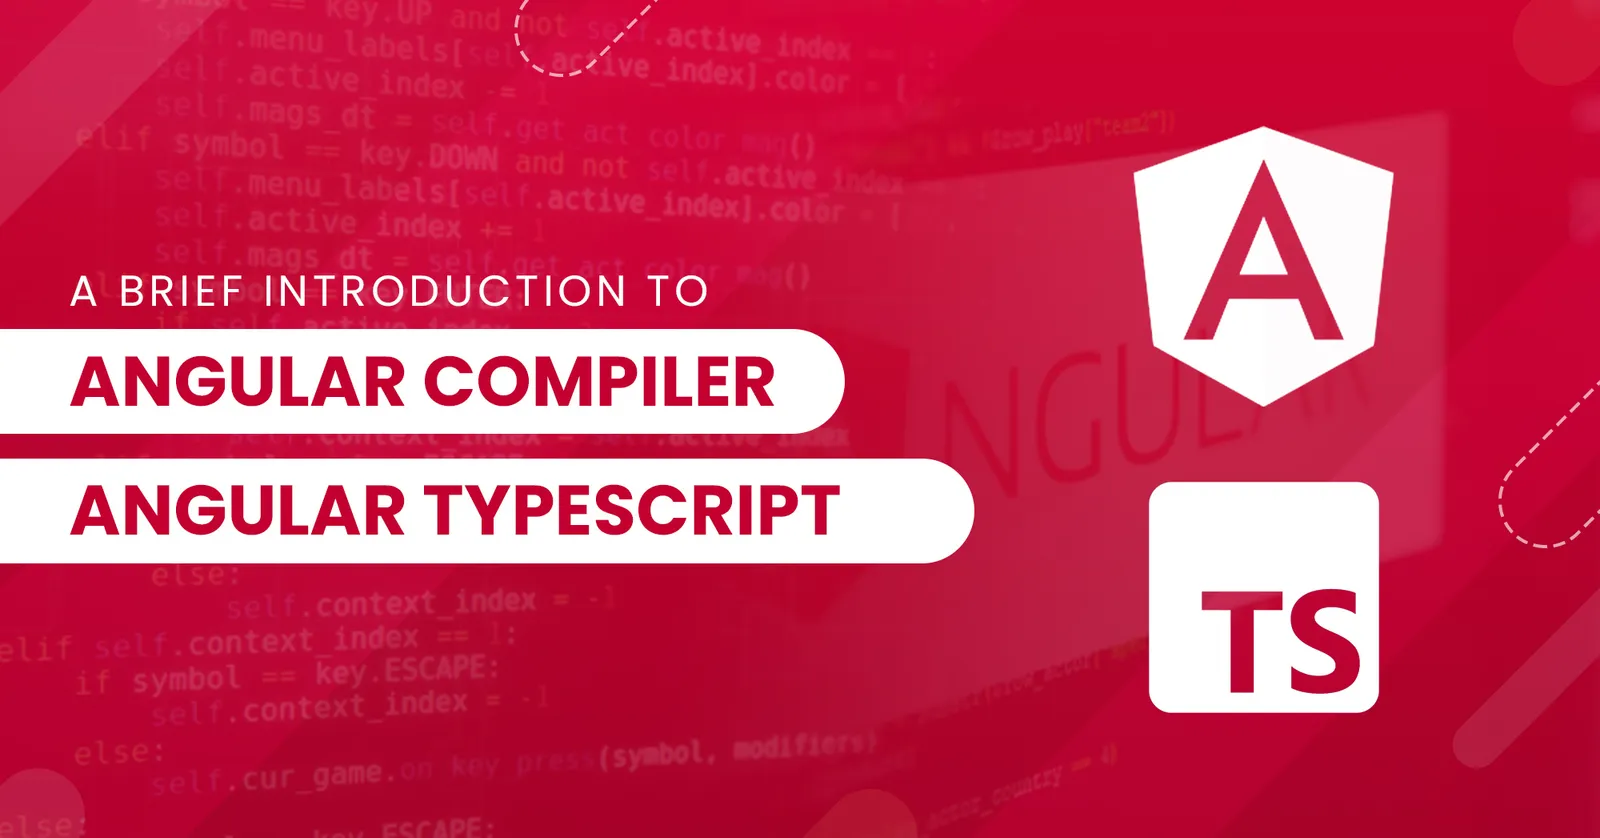 Angular compiler and angular typescript